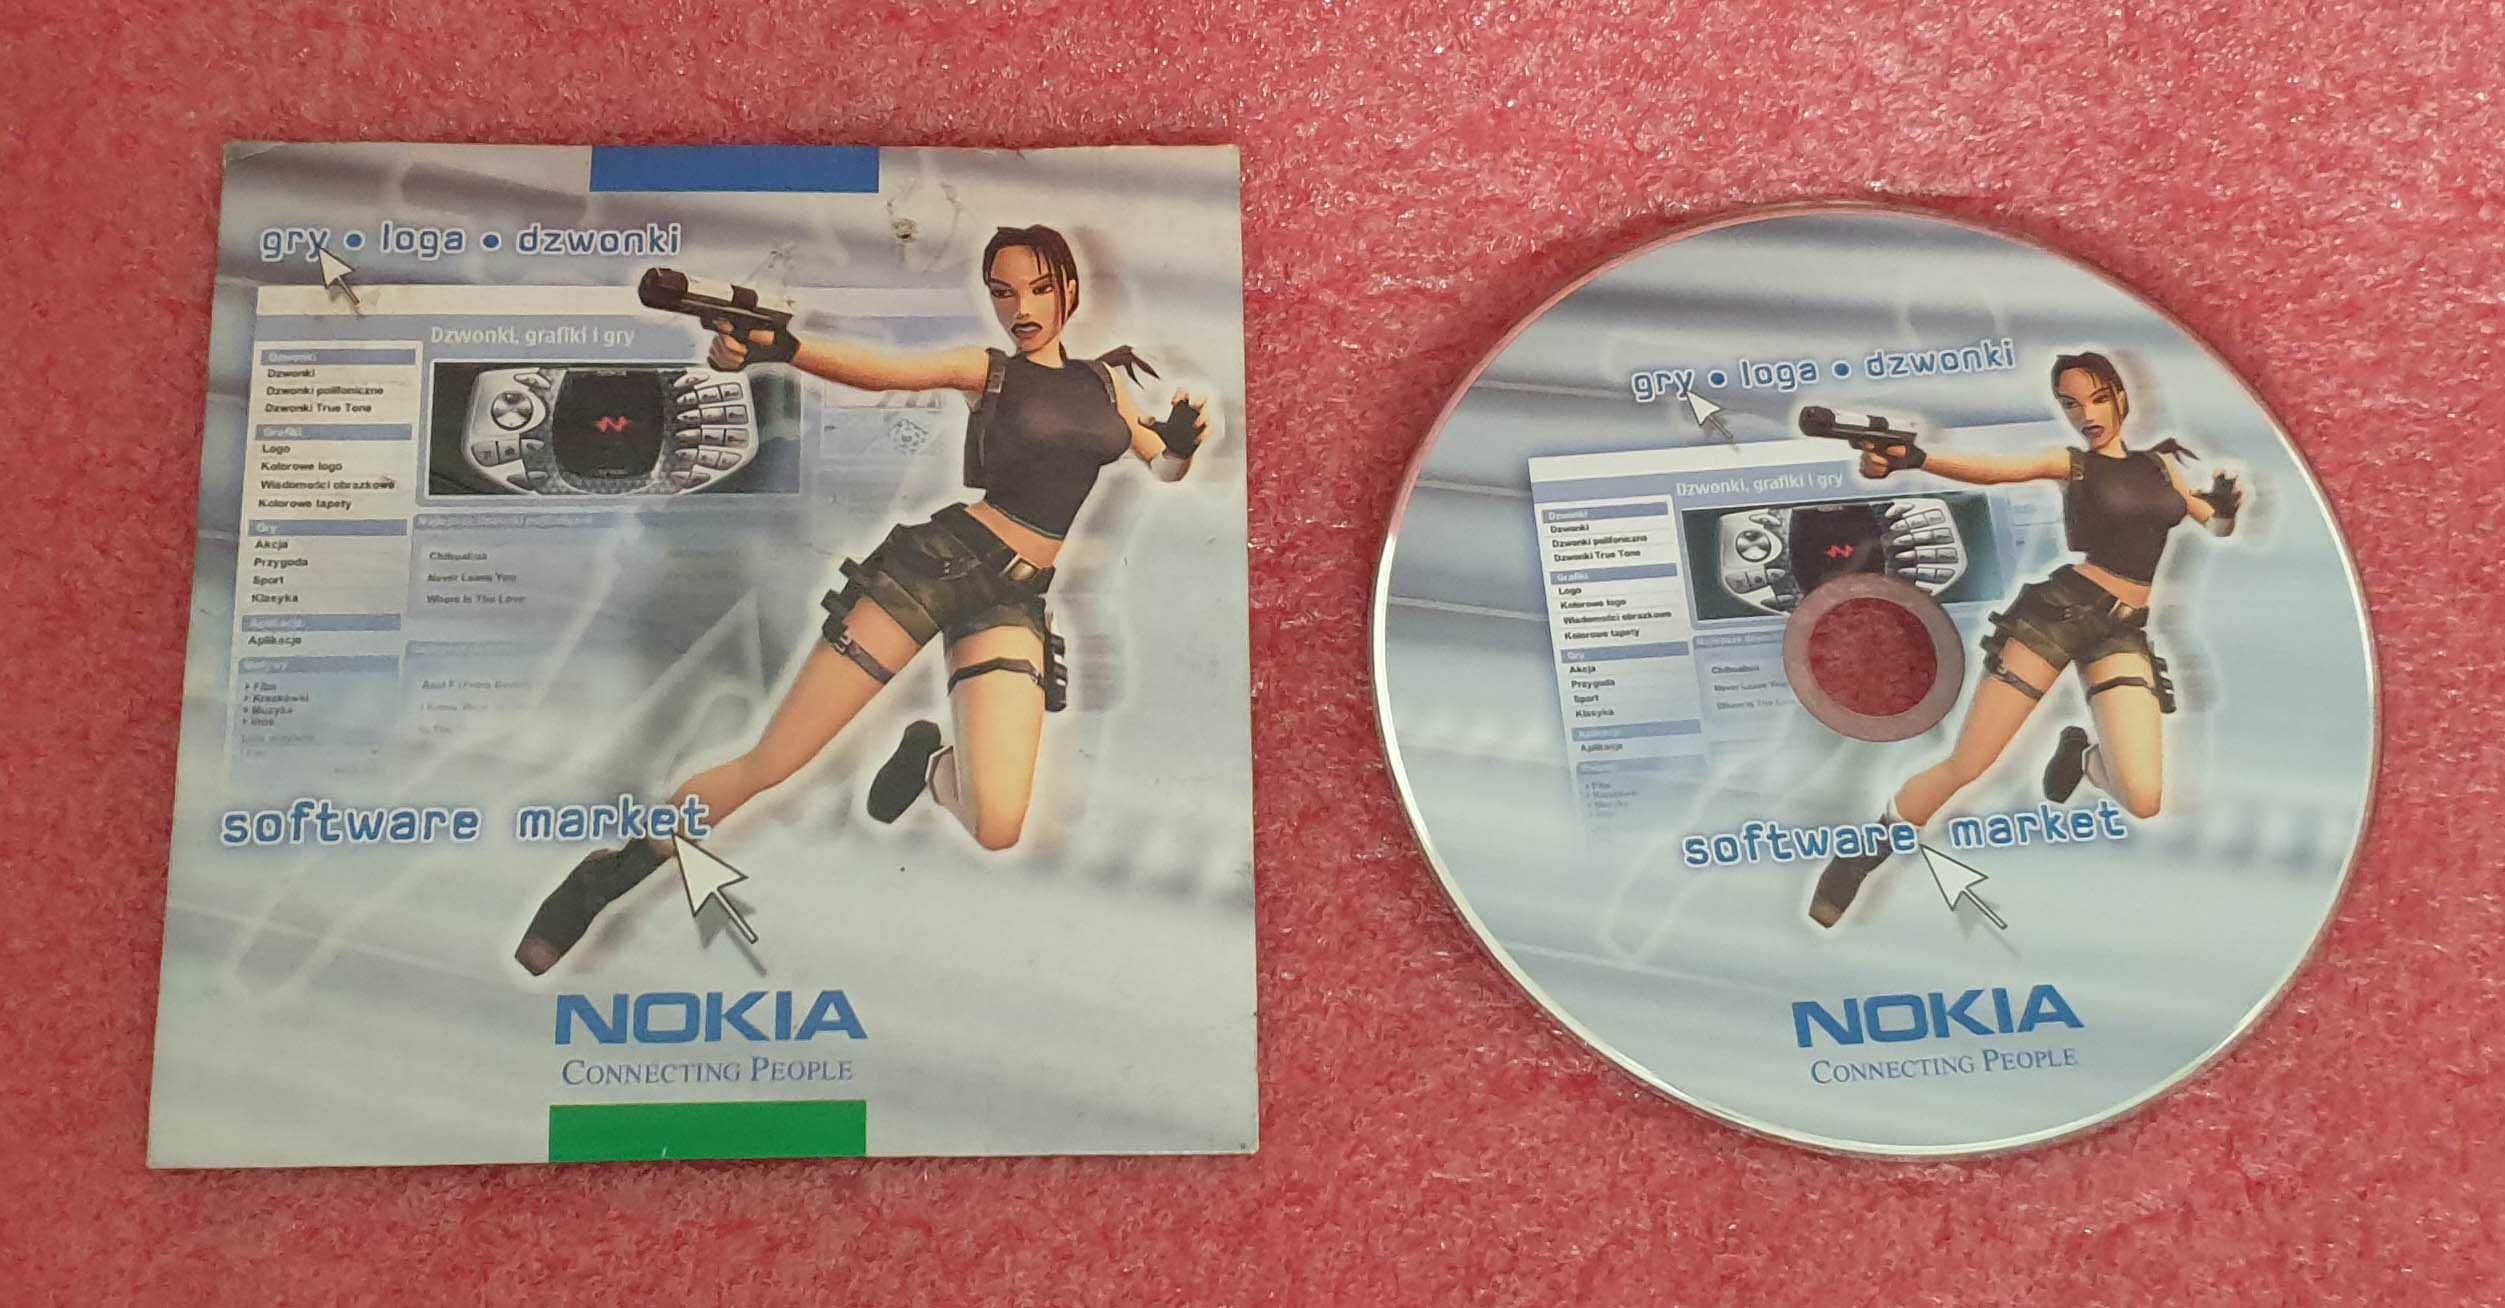 Nokia software market dvd 2004